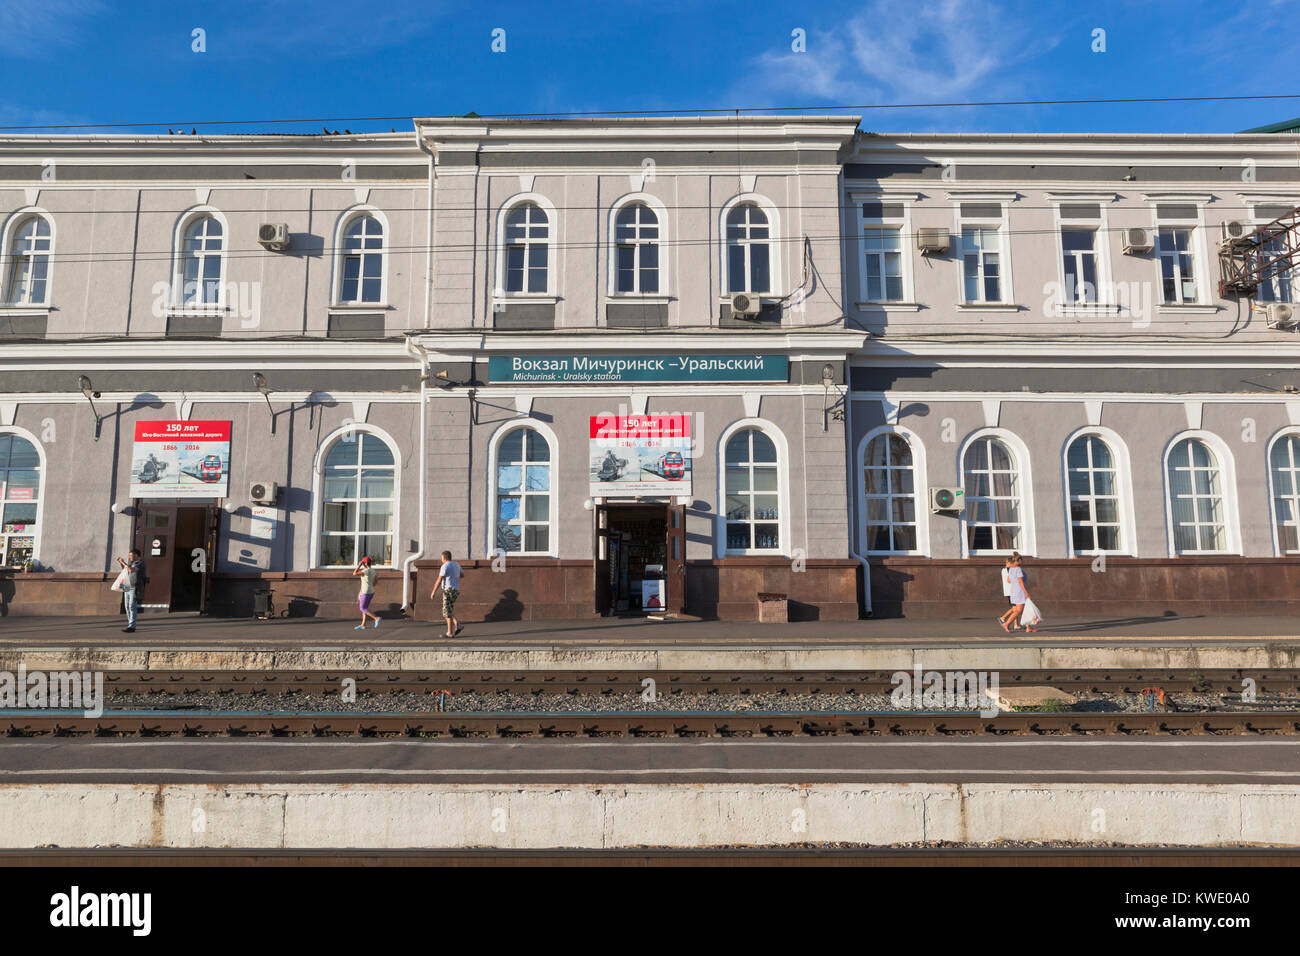 Michurinsk, Tambov region, Russia - July 24, 2017: Building of the Michurinsk-Uralsky railway station in the Tambov region Stock Photo